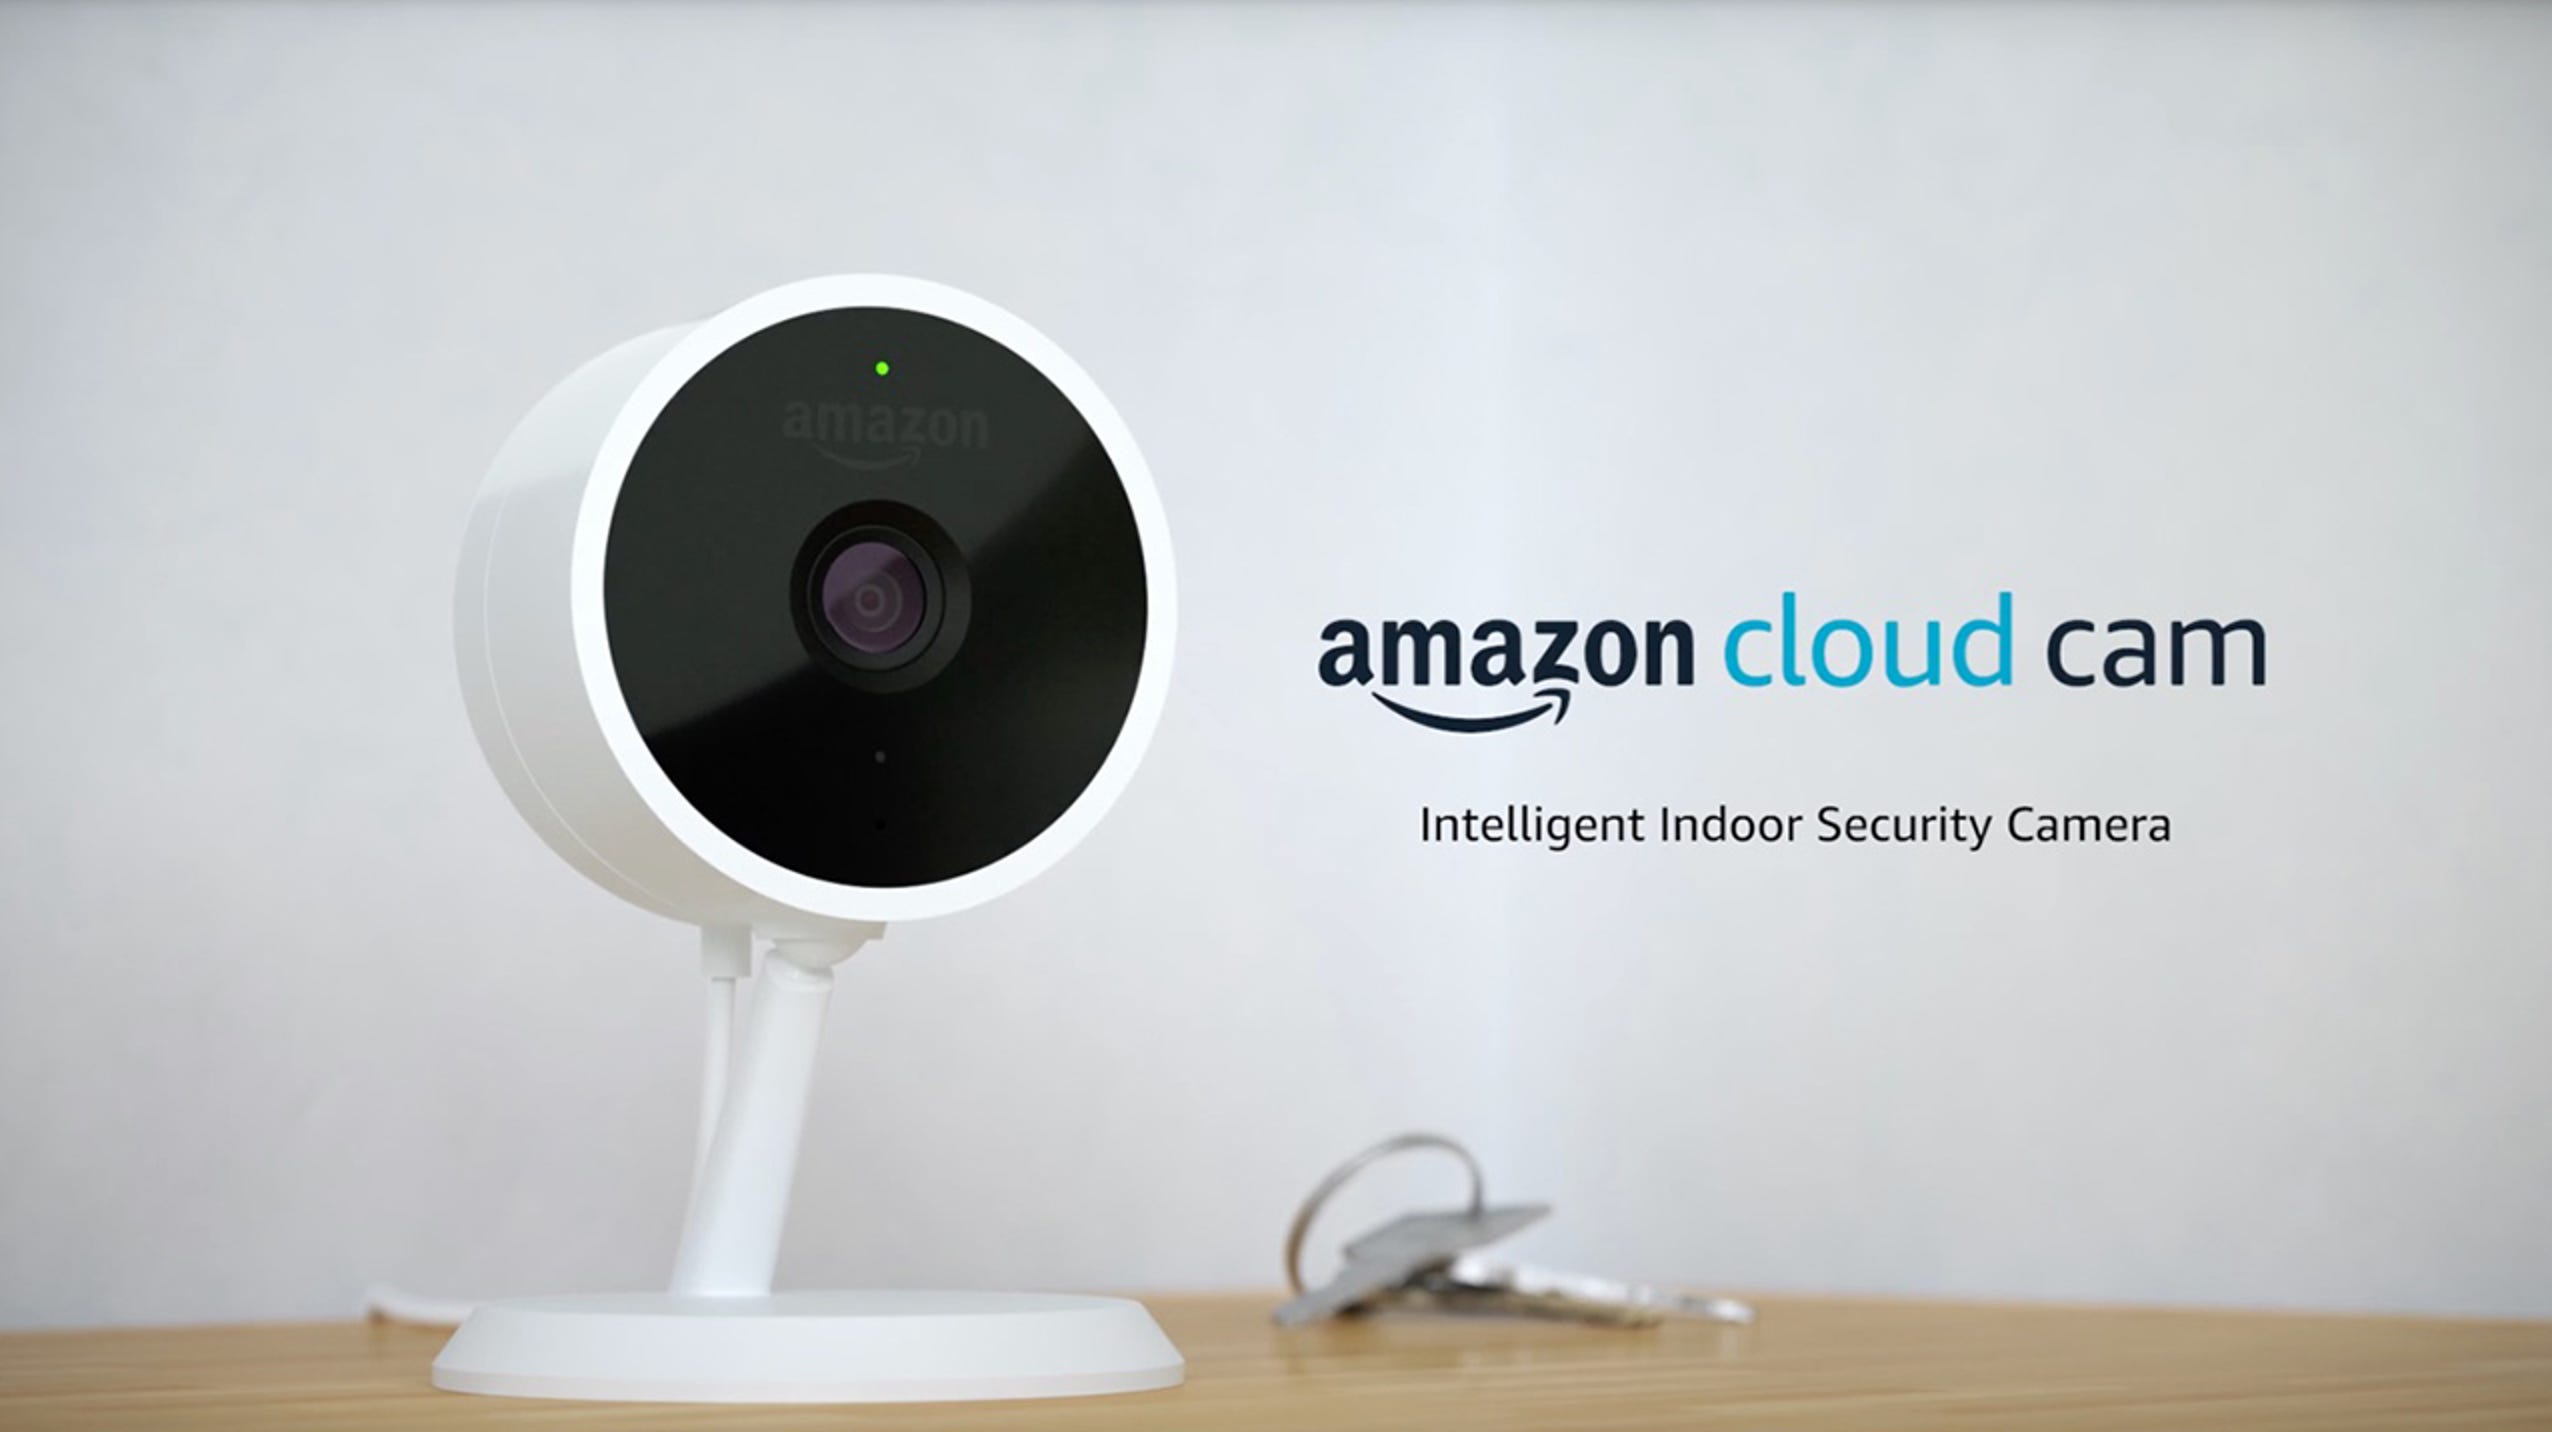 Amazon Cloud Cam Website